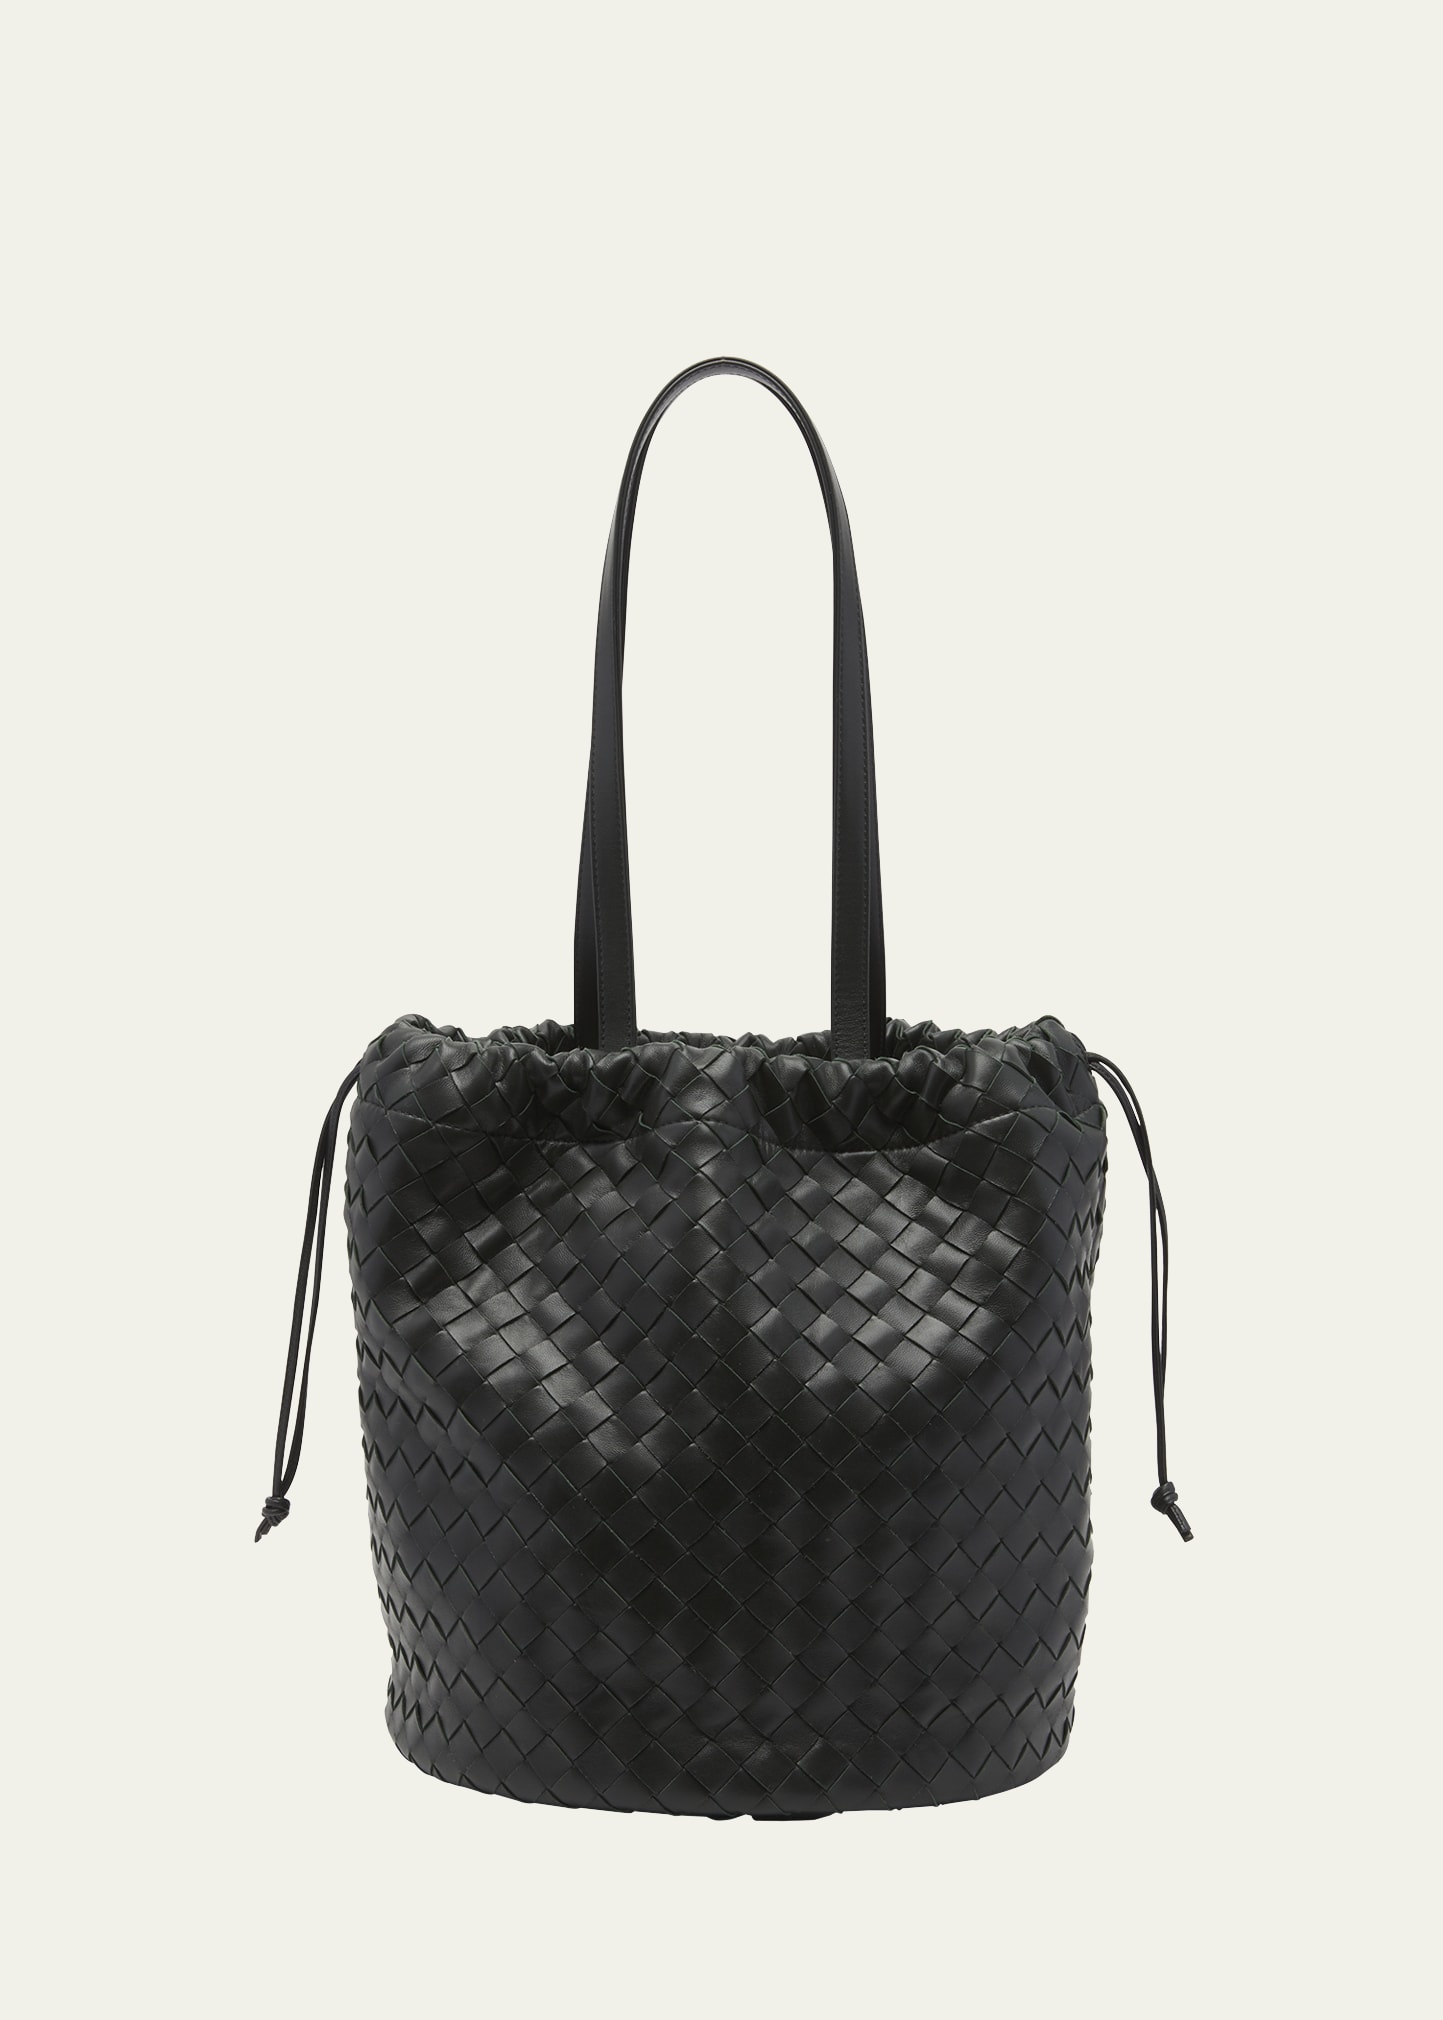 Bottega Veneta Woven Leather Tote Bag